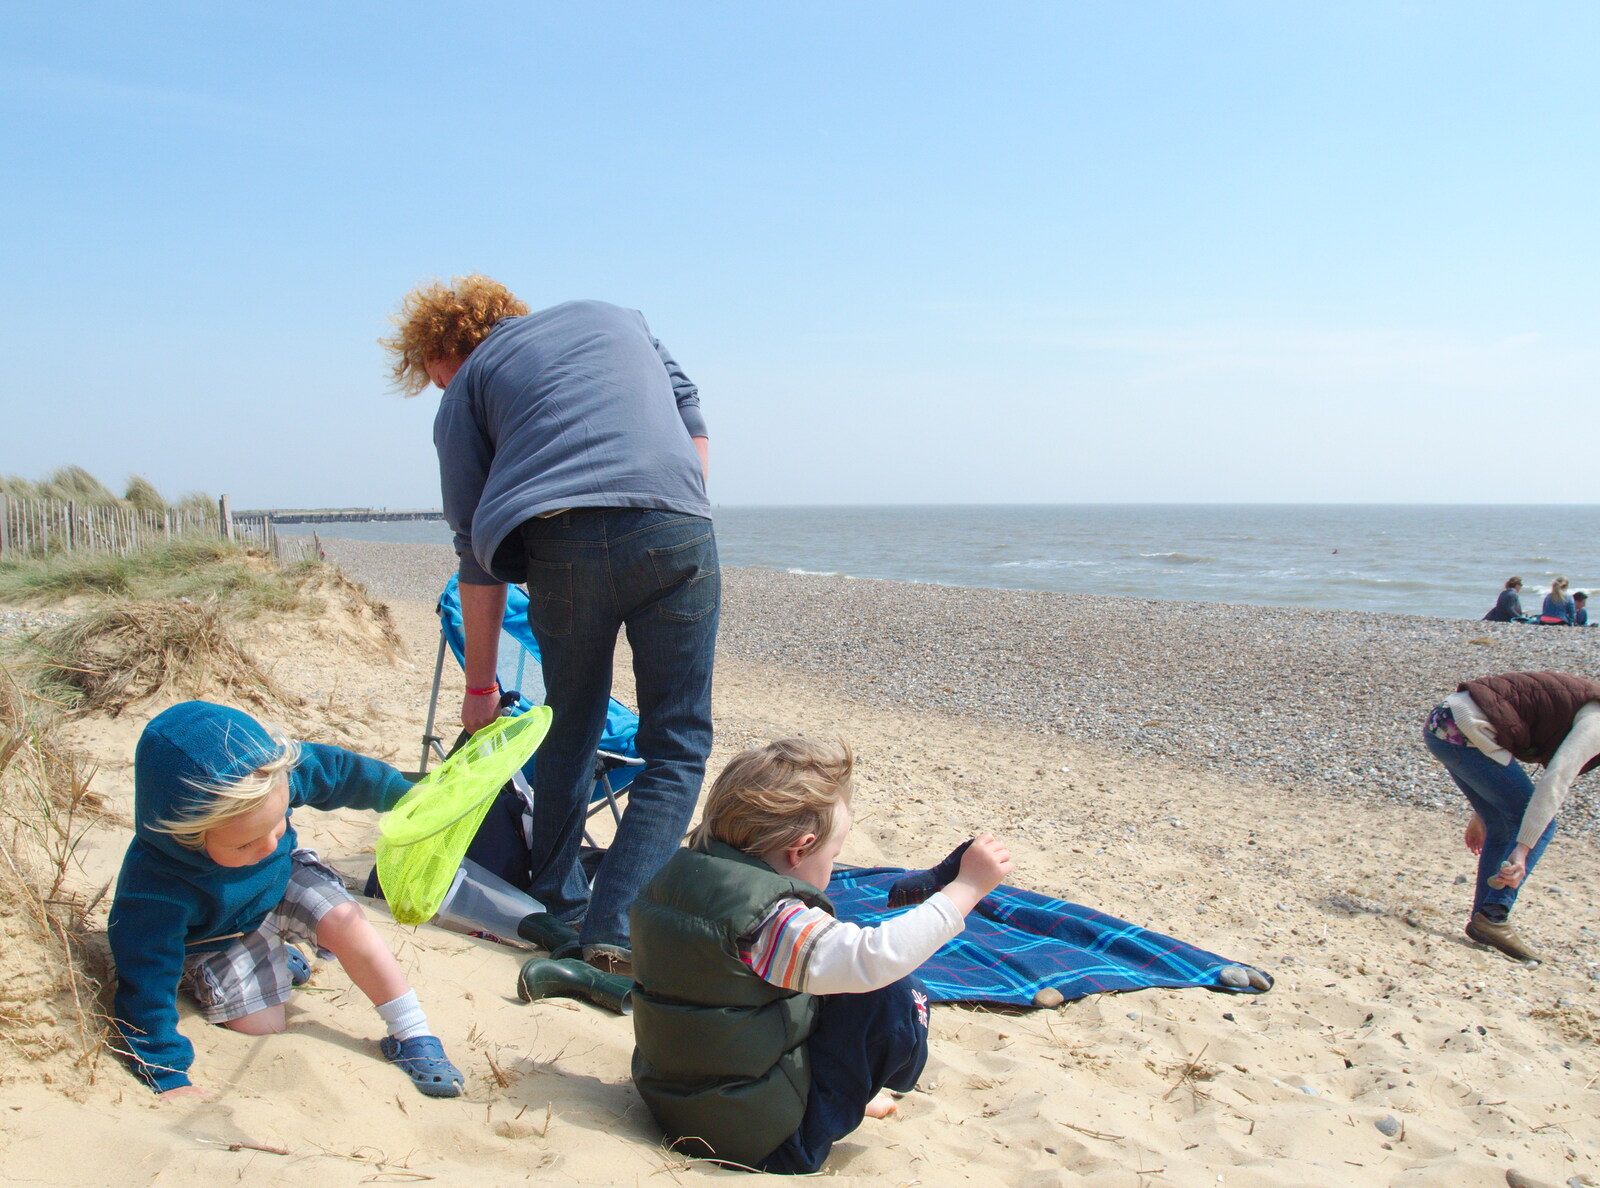 Wavy on the beach from Life's A Windy Beach, Walberswick, Suffolk - 5th May 2014